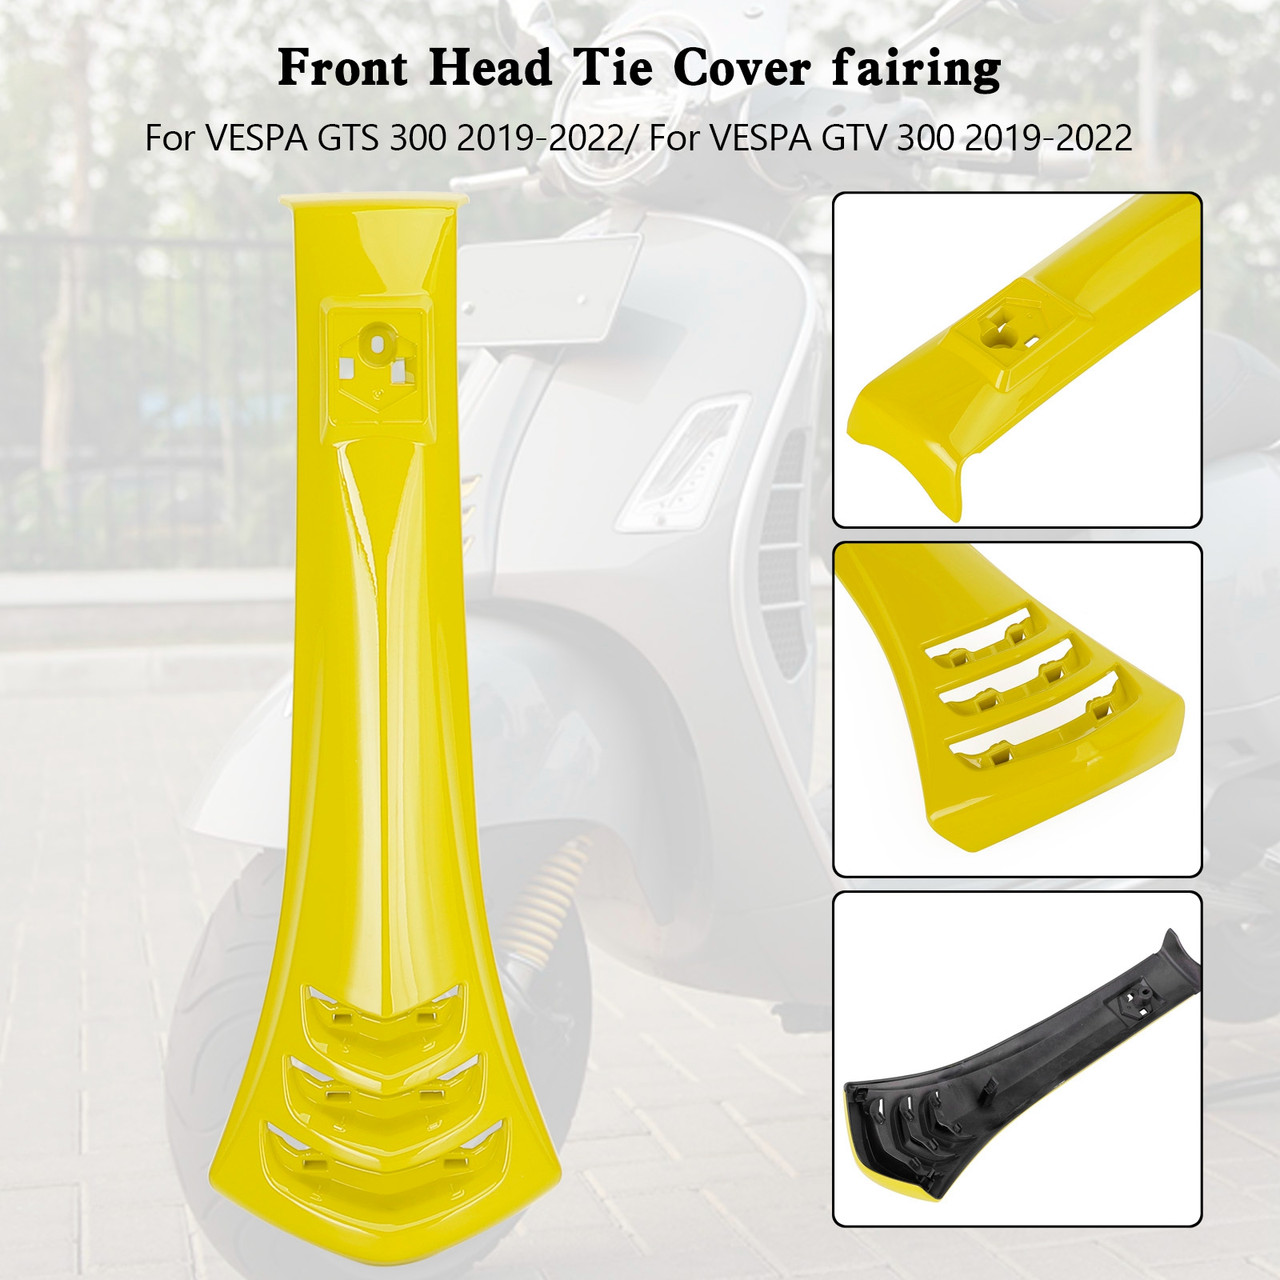 Steering Horn Head Cover fairing Tie For VESPA GTS300 GTV300 2019-2022 YEL